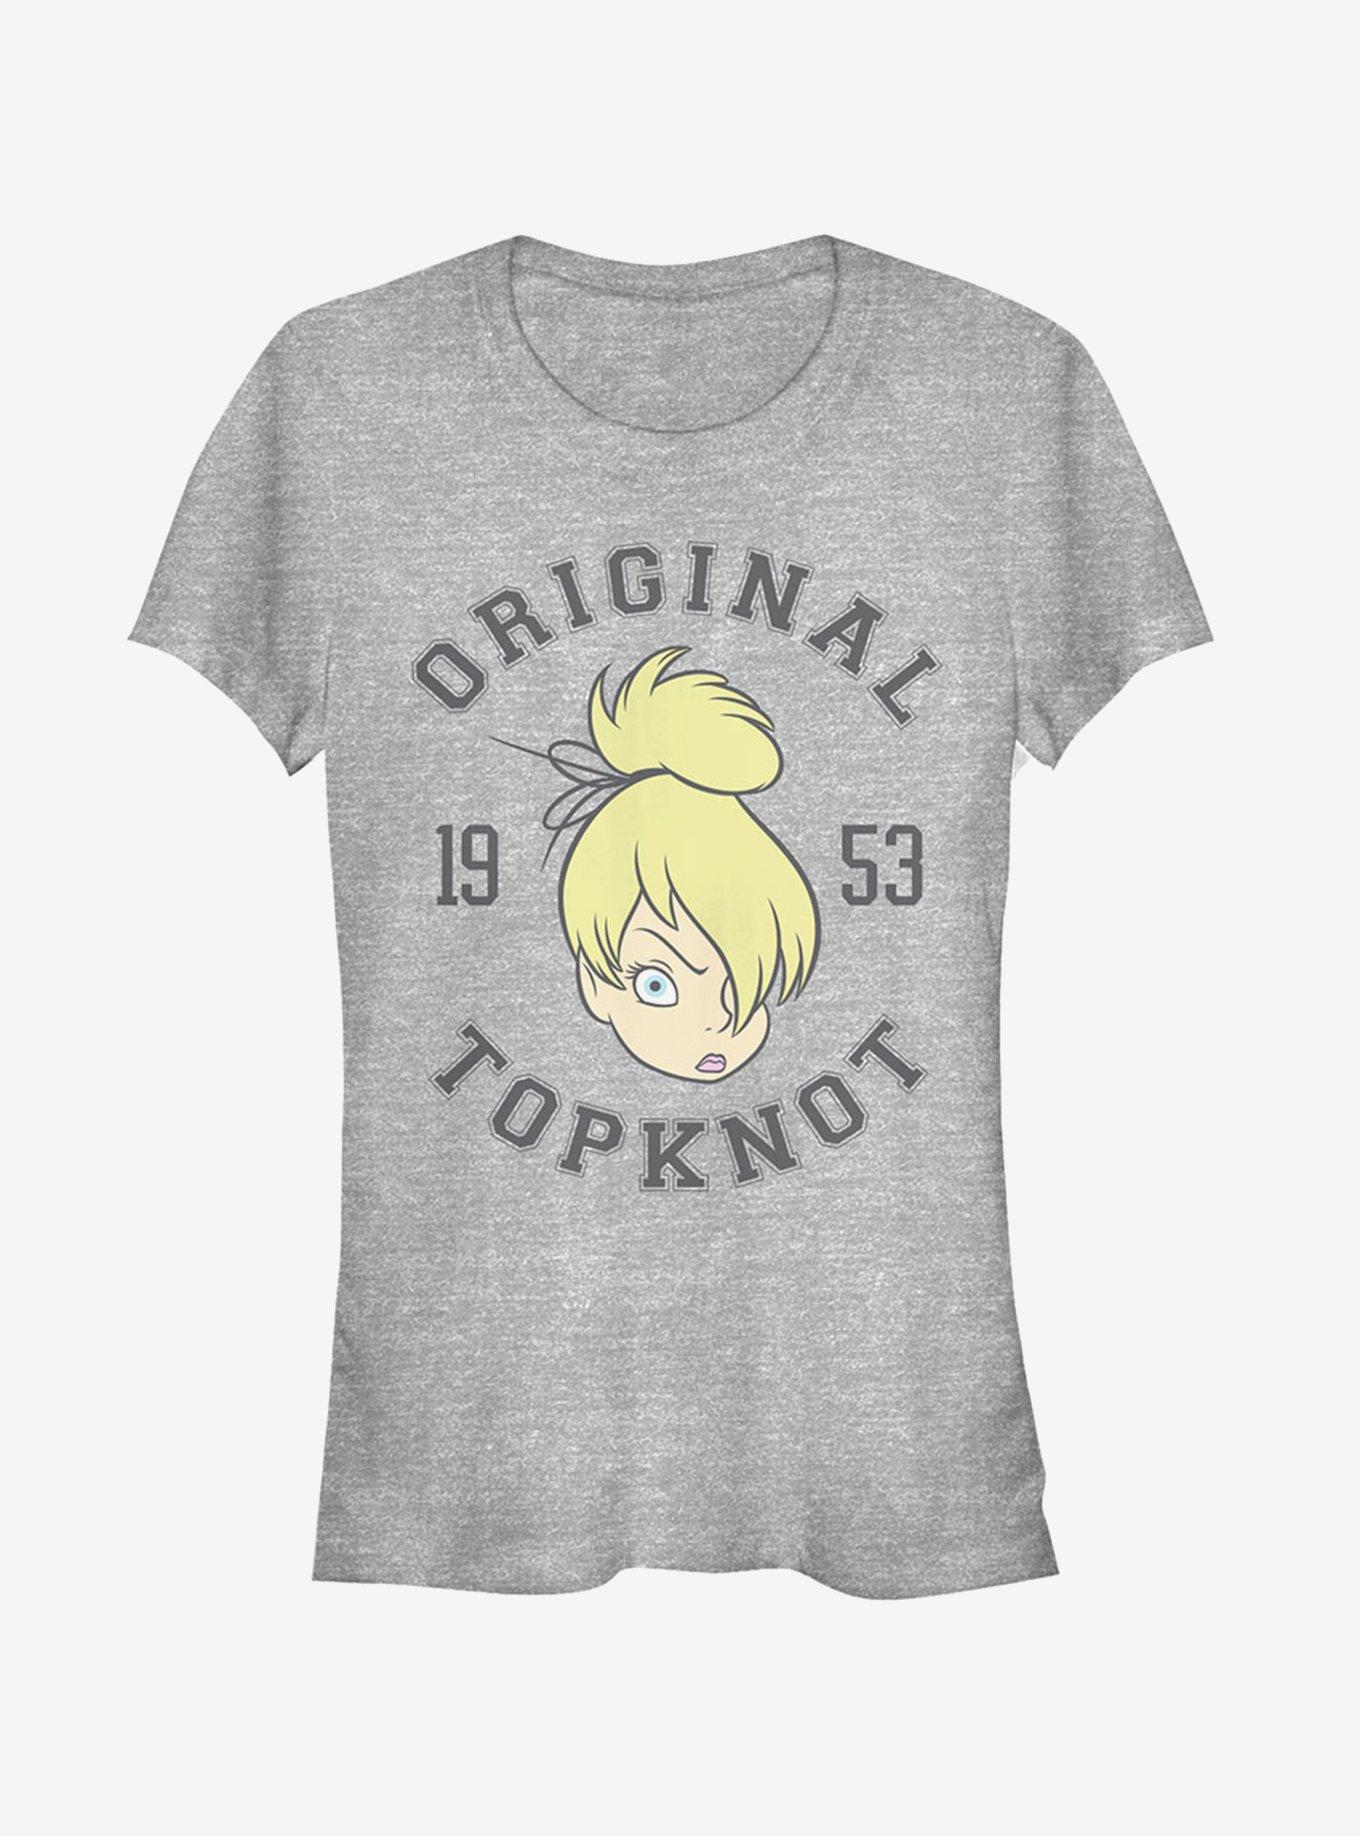 Disney Tinker Bell Topknot Girls T-Shirt, ATH HTR, hi-res